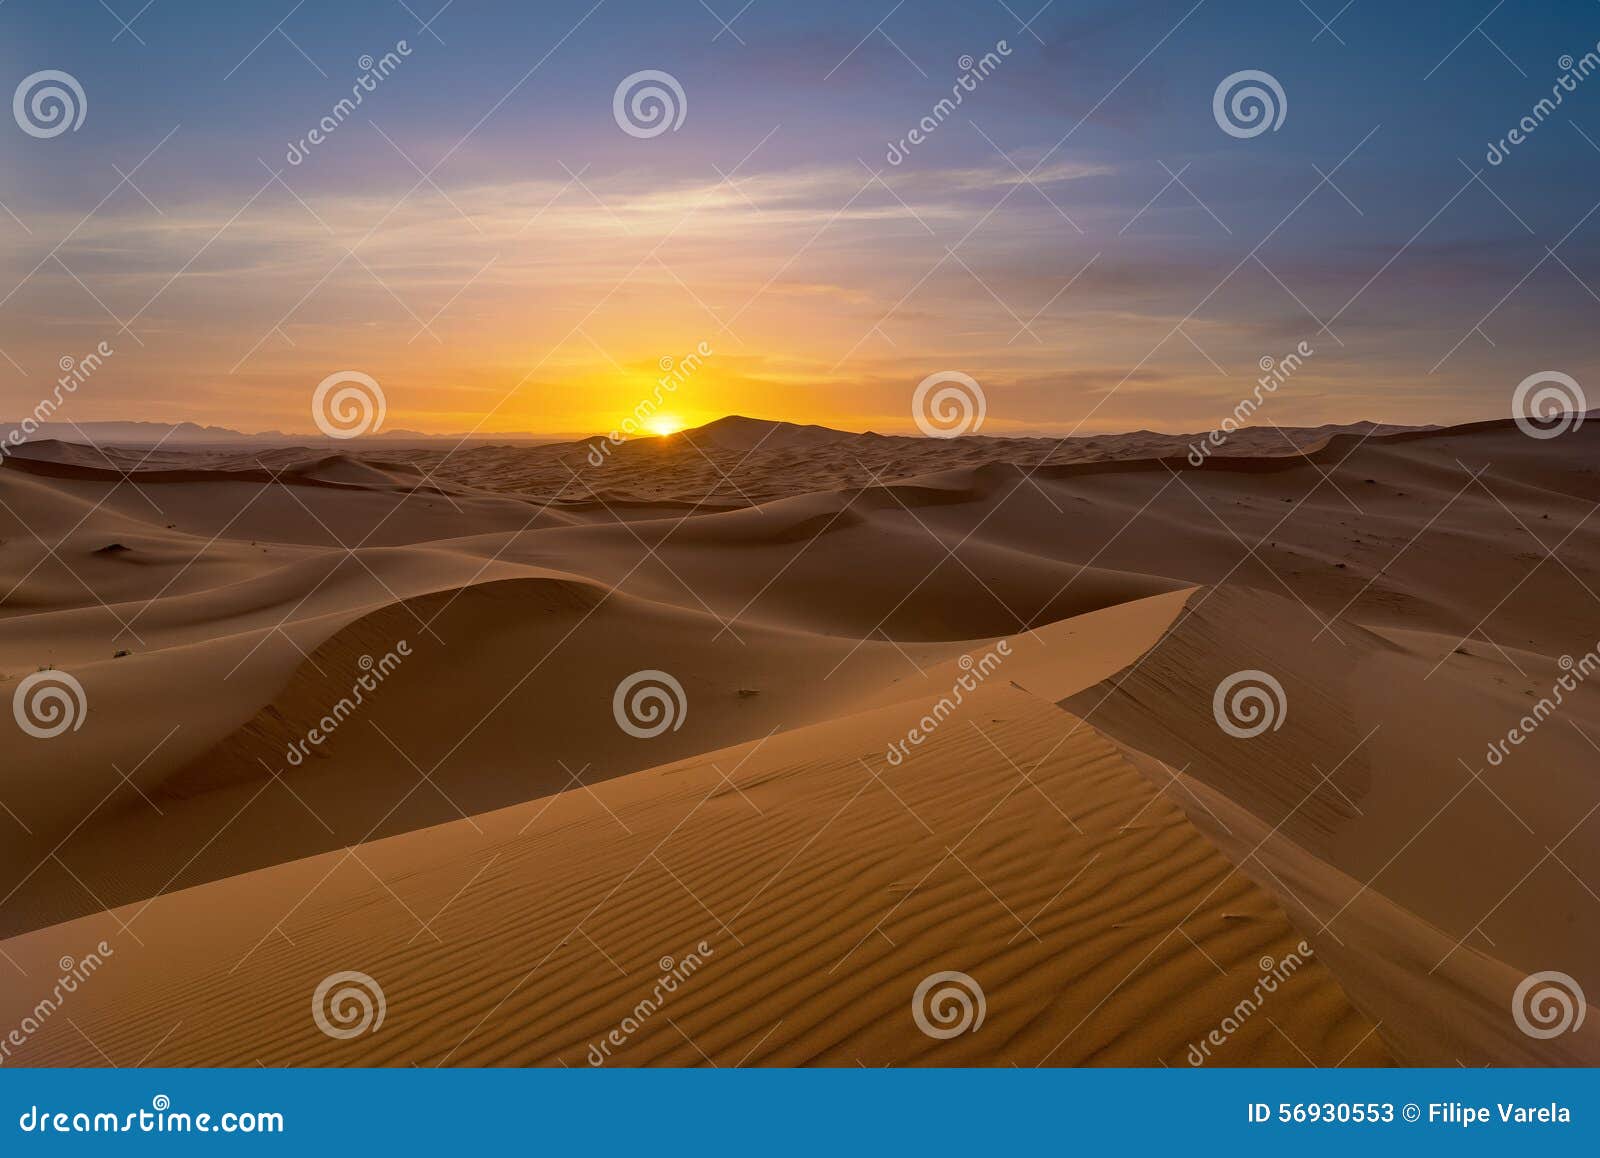 view of erg chebbi dunes - sahara desert